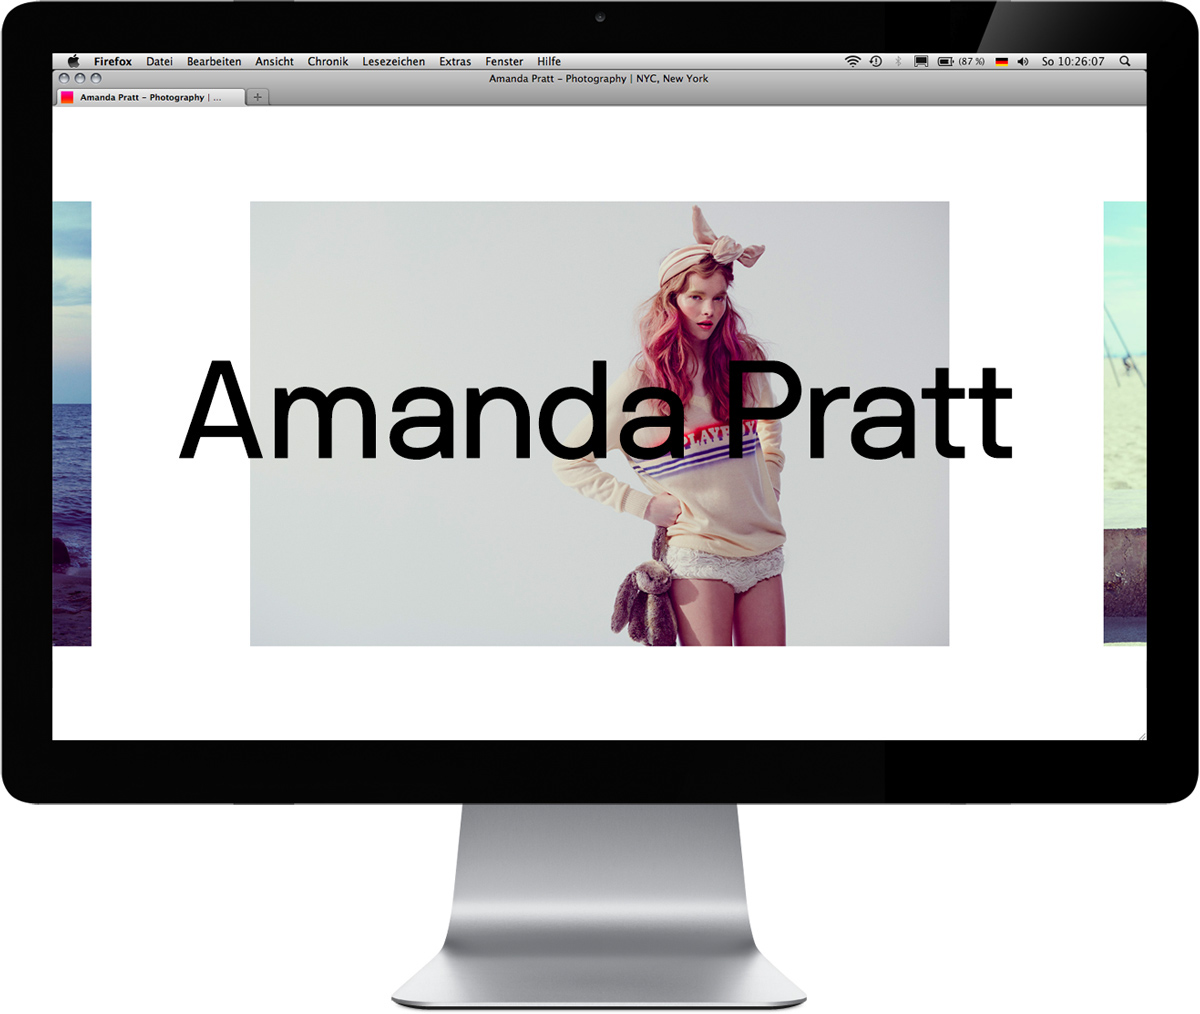 amanda pratt New York photographer identity